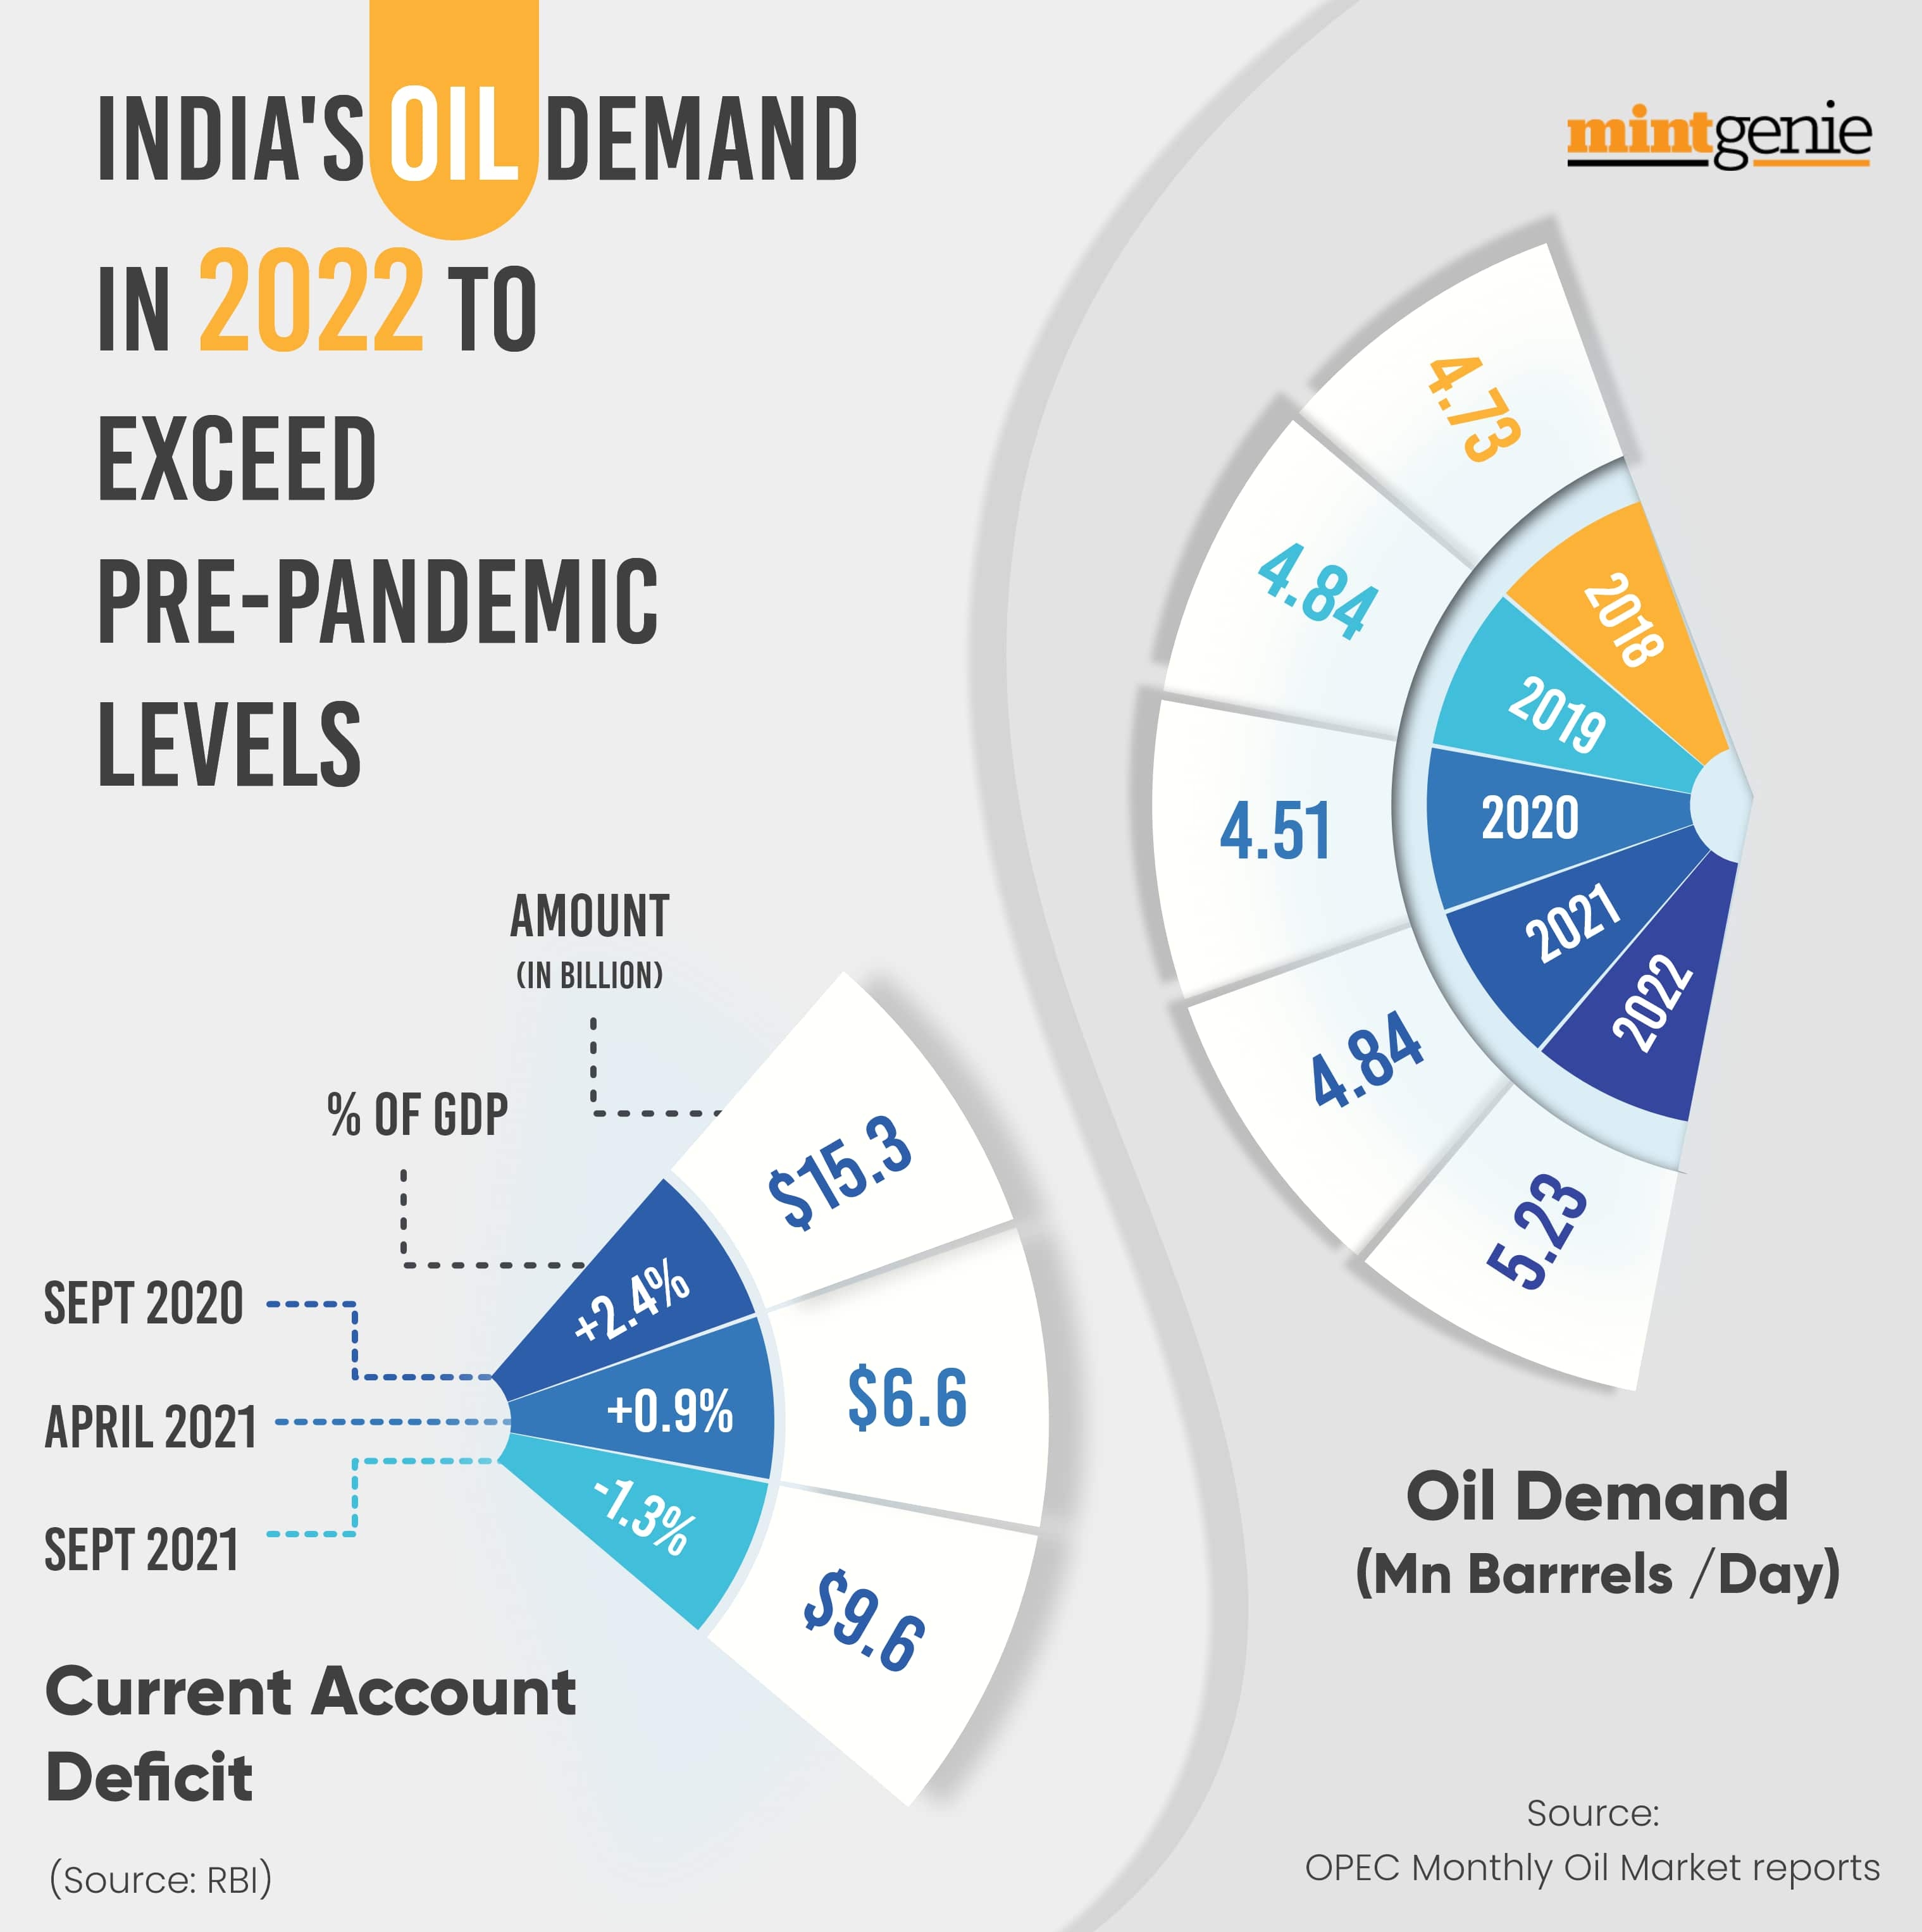 India's Oil demand in 2022